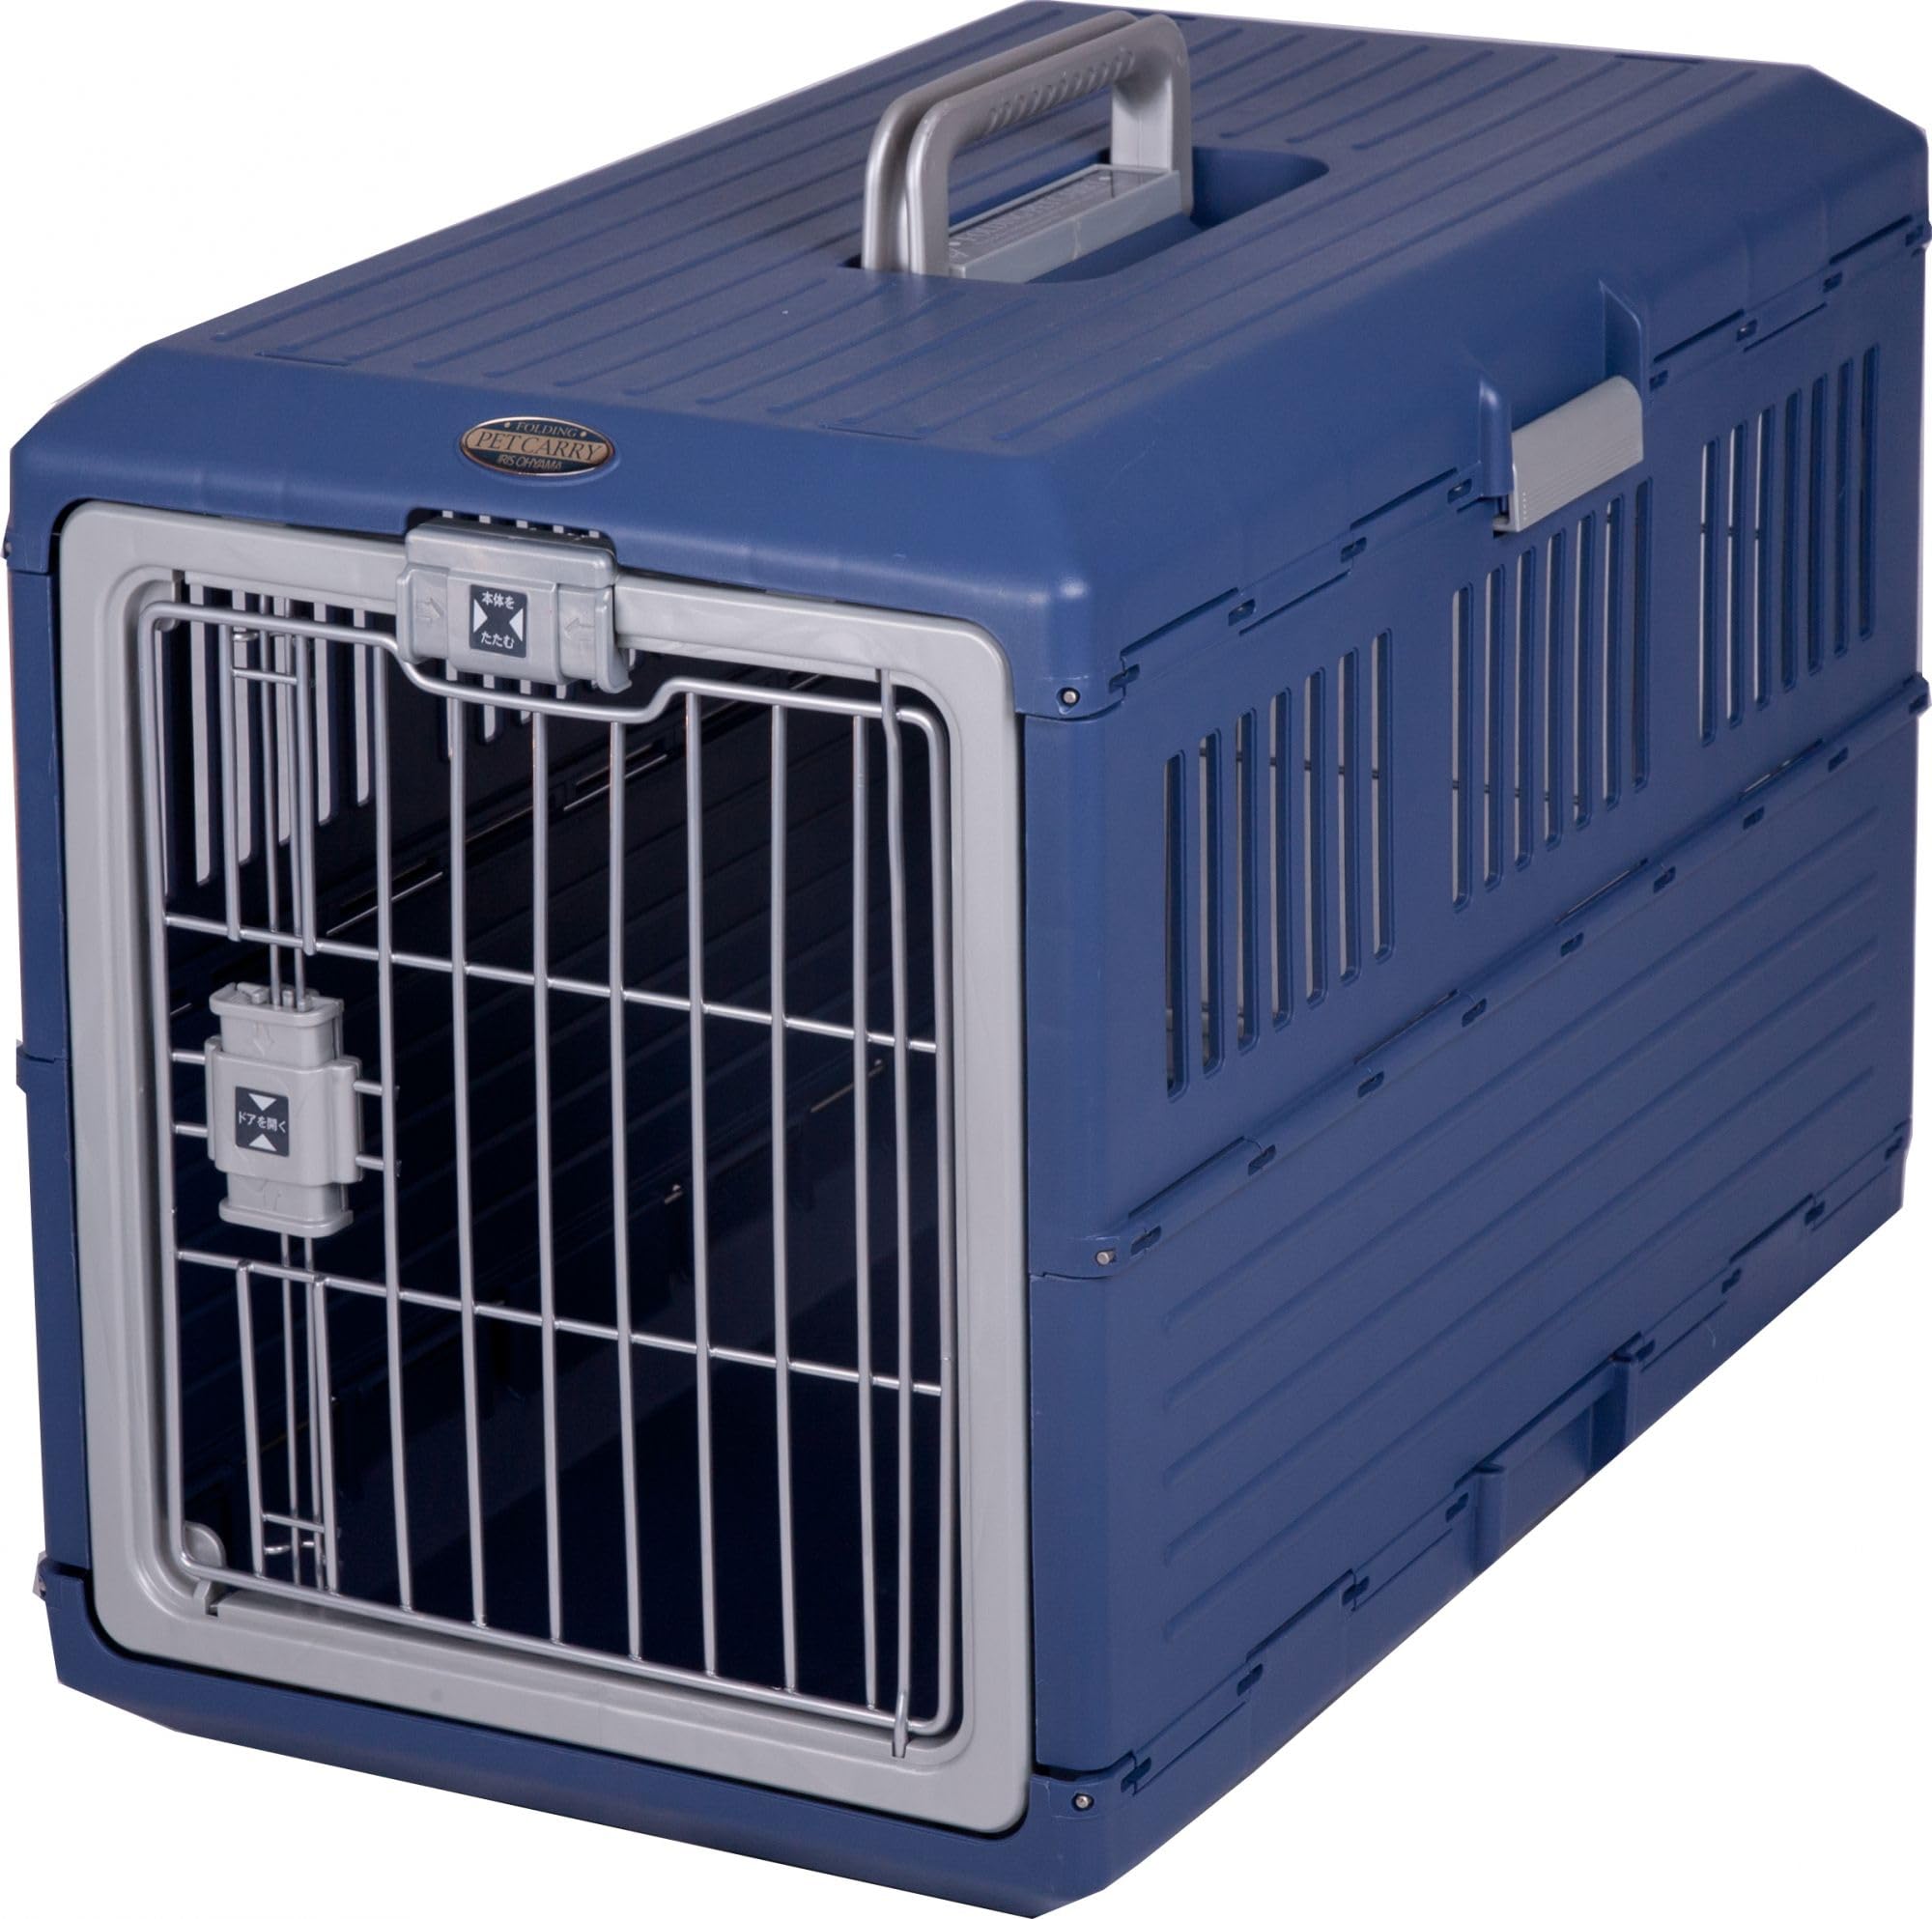 Iris Ohyama, Kiste, Käfig, Transportbox für Hund, Katze, 2 Türen, L68.6 x T40.3 x H47.8 cm, FC-670, Blau